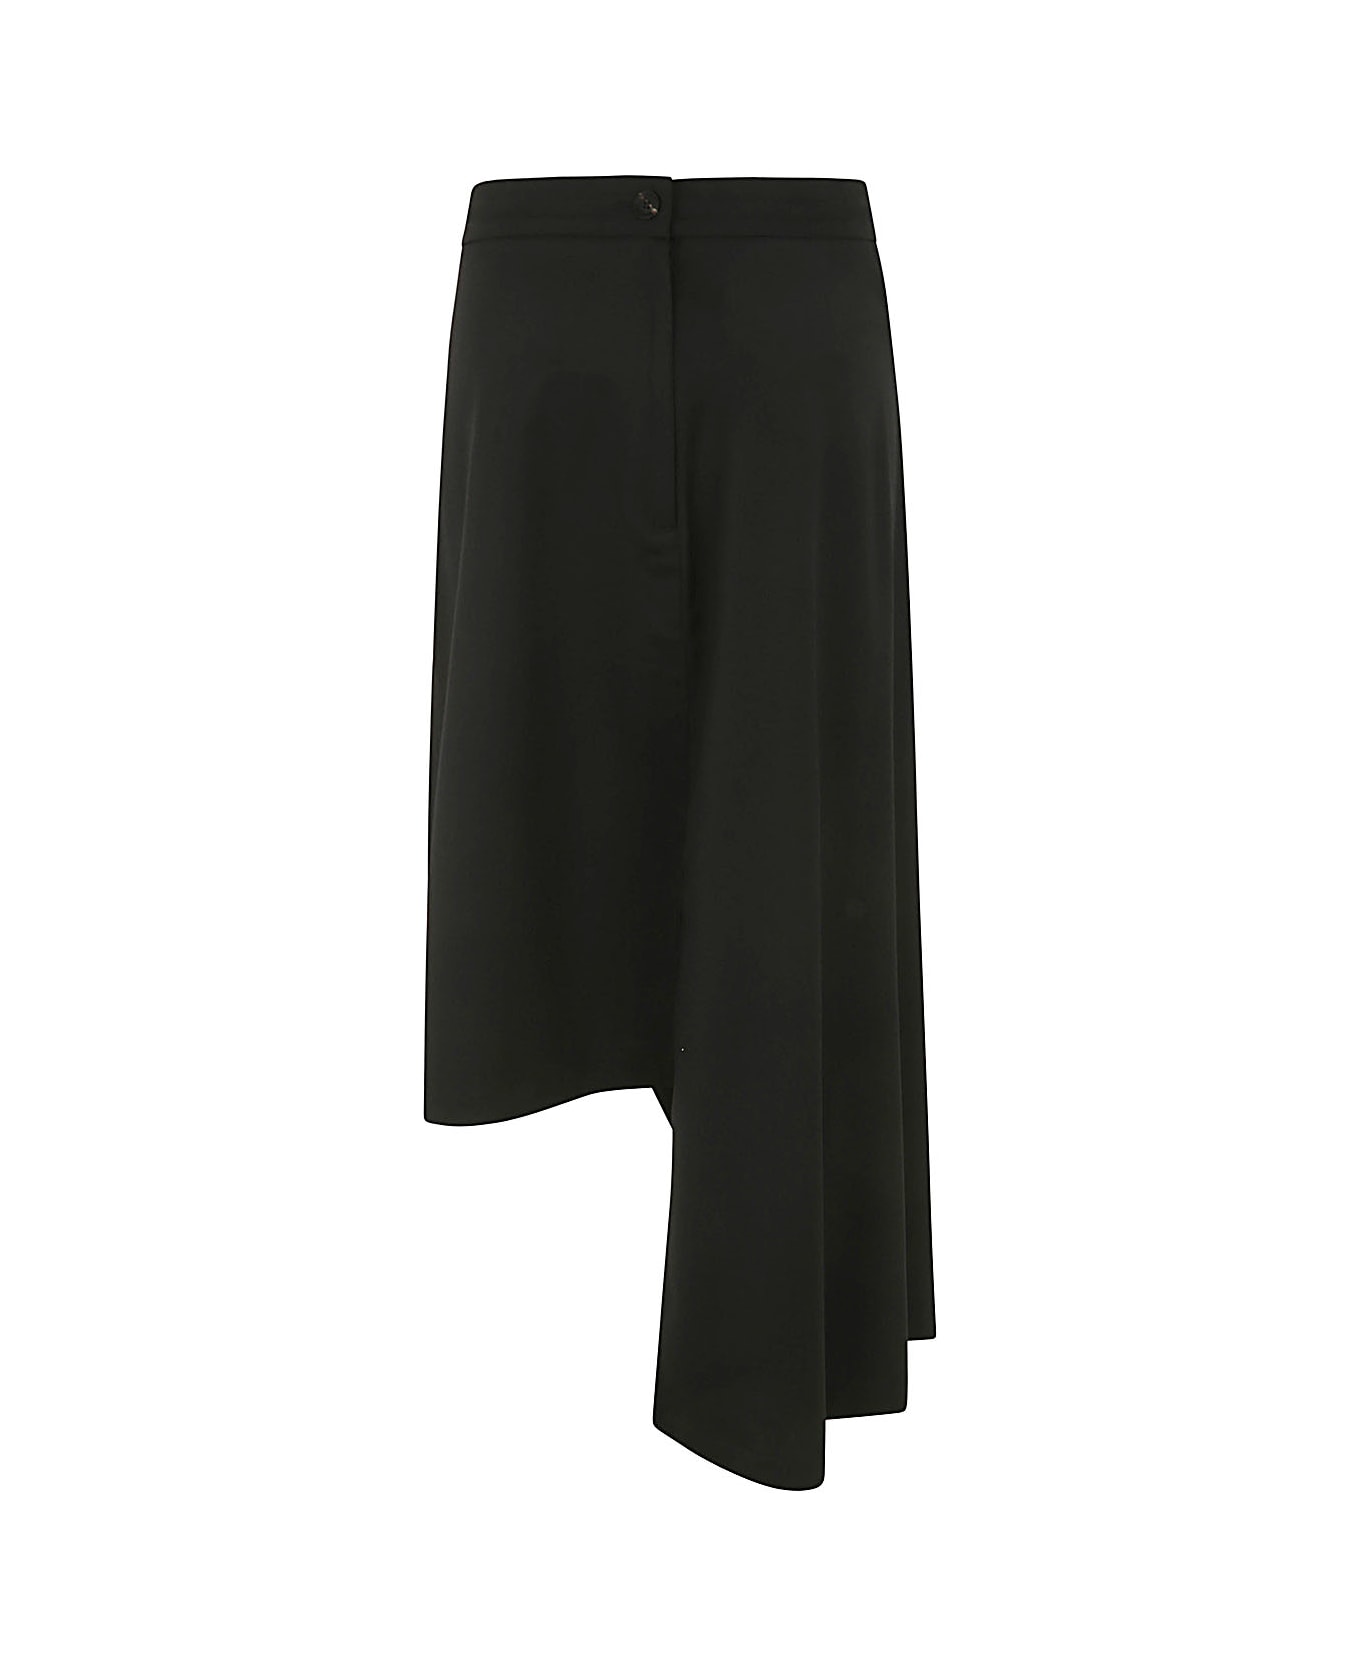 Y-3 Long Skirt - Black スカート